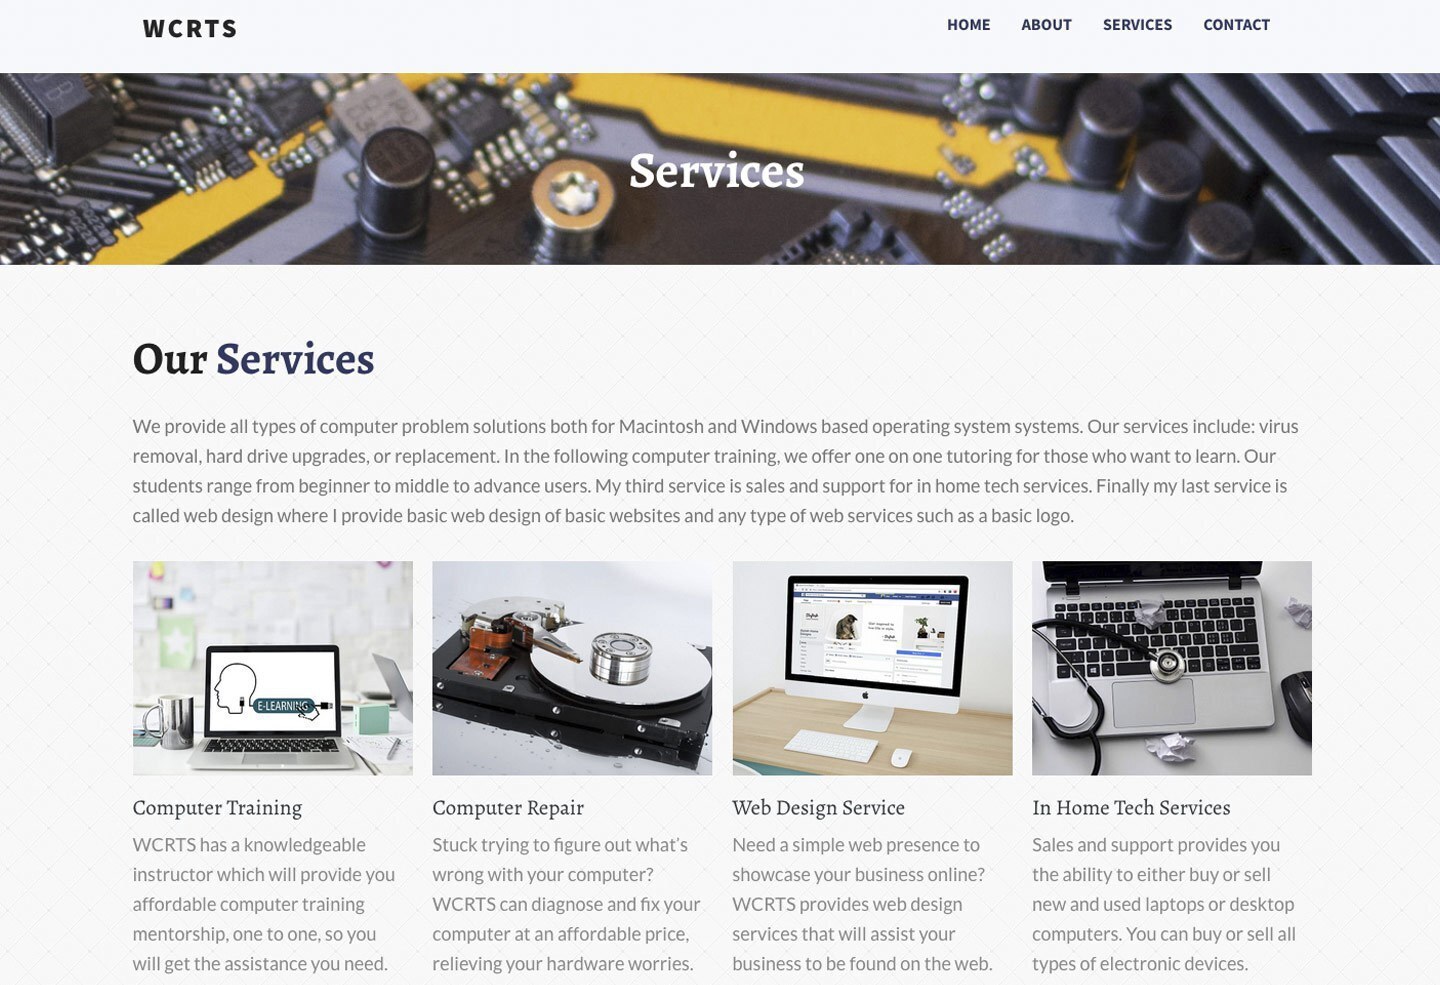 WCRTS Services Page